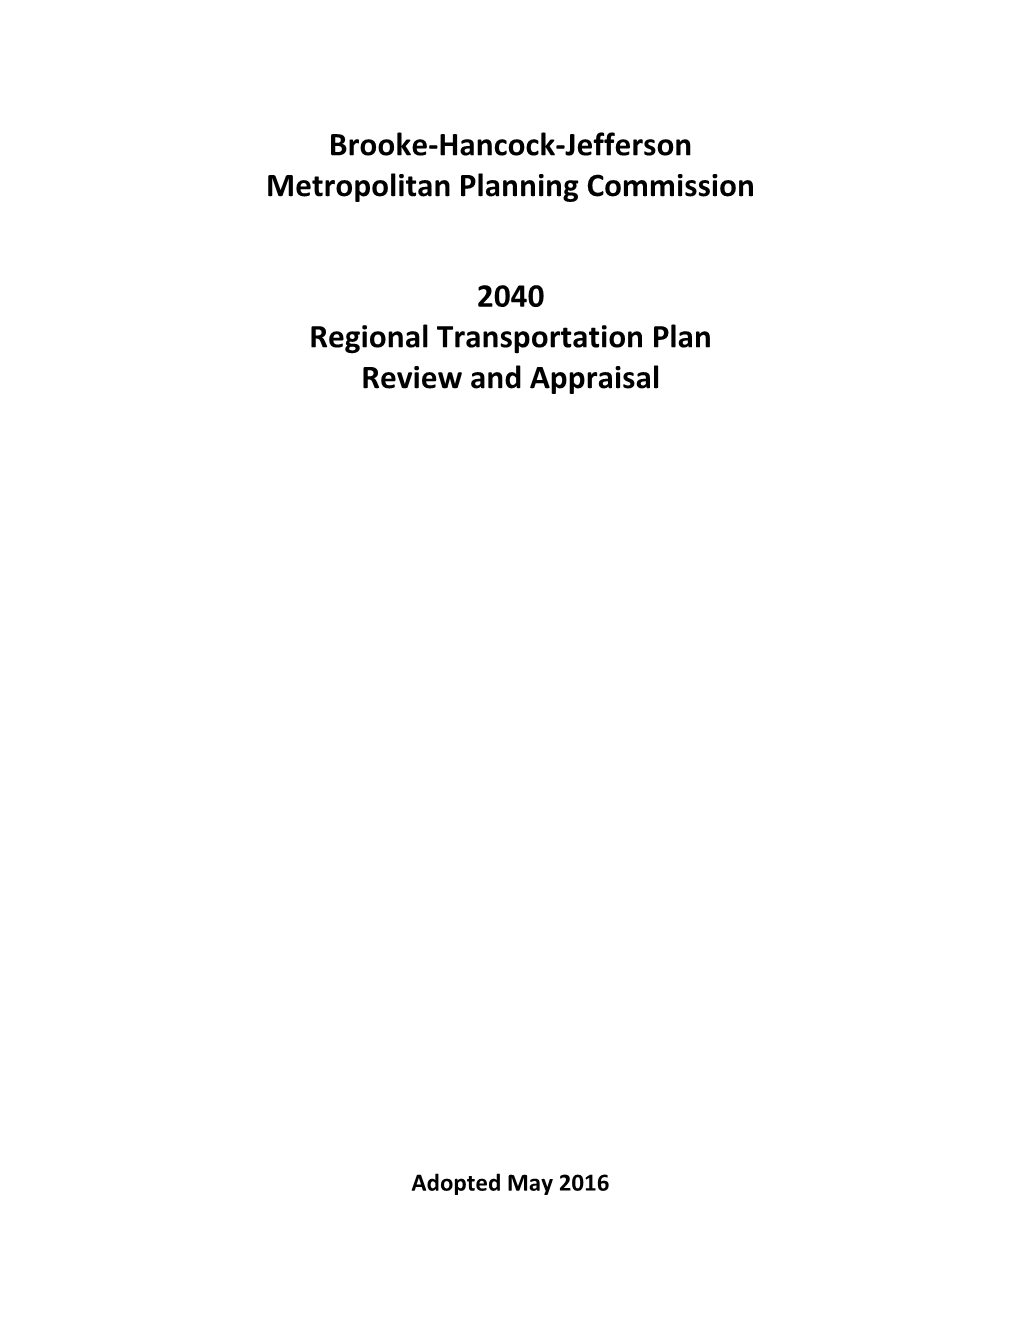 Brooke-Hancock-Jefferson Metropolitan Planning Commission